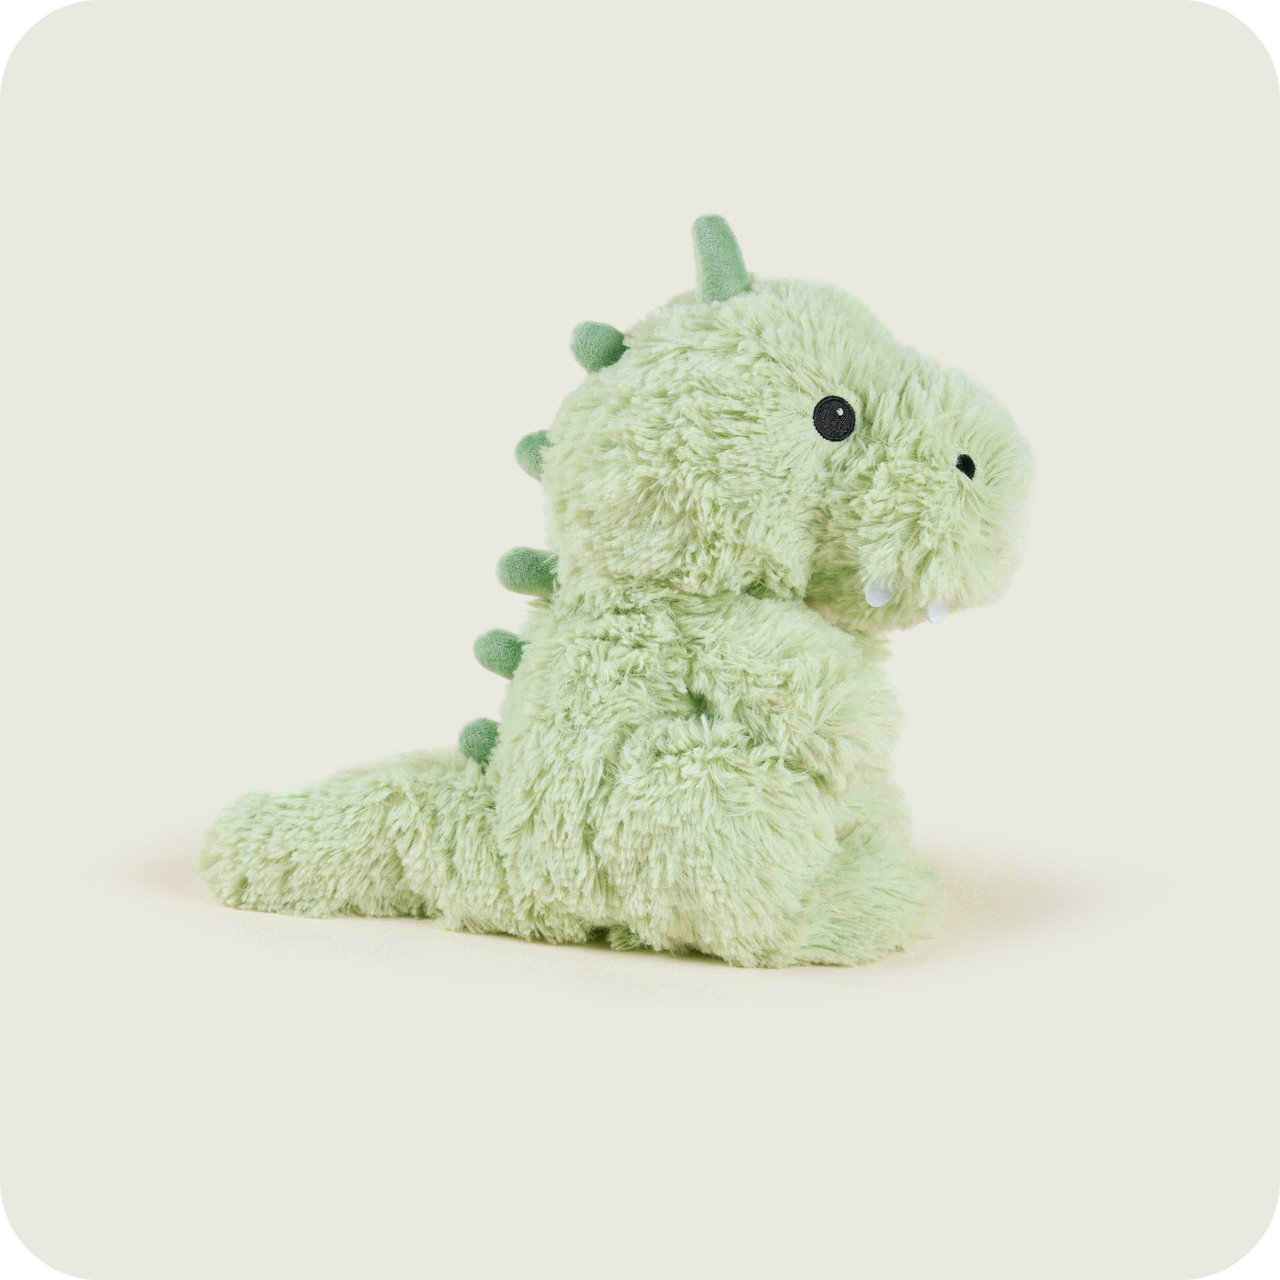 WARMIES Cozy Plush Heatable Stuffed Animal Toy Dinosaur Green Used